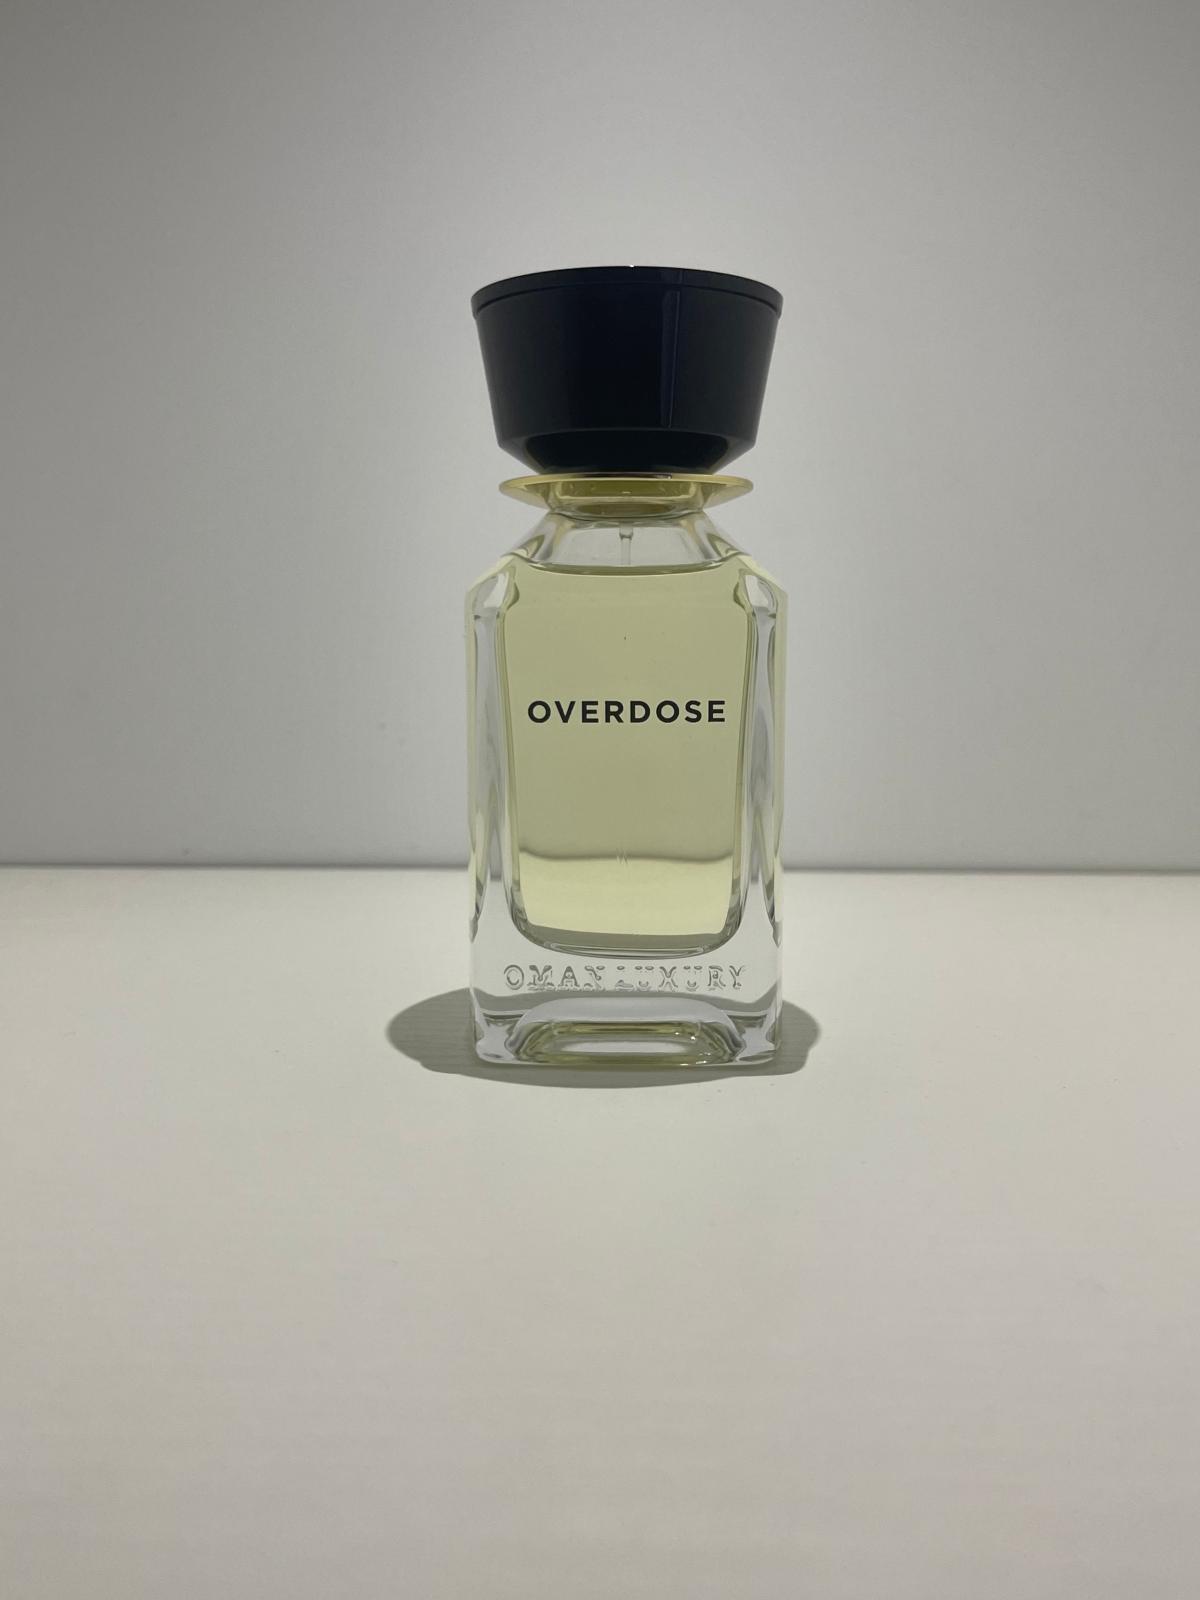 Overdose Omanluxury perfume - a fragrance for women and men 2020